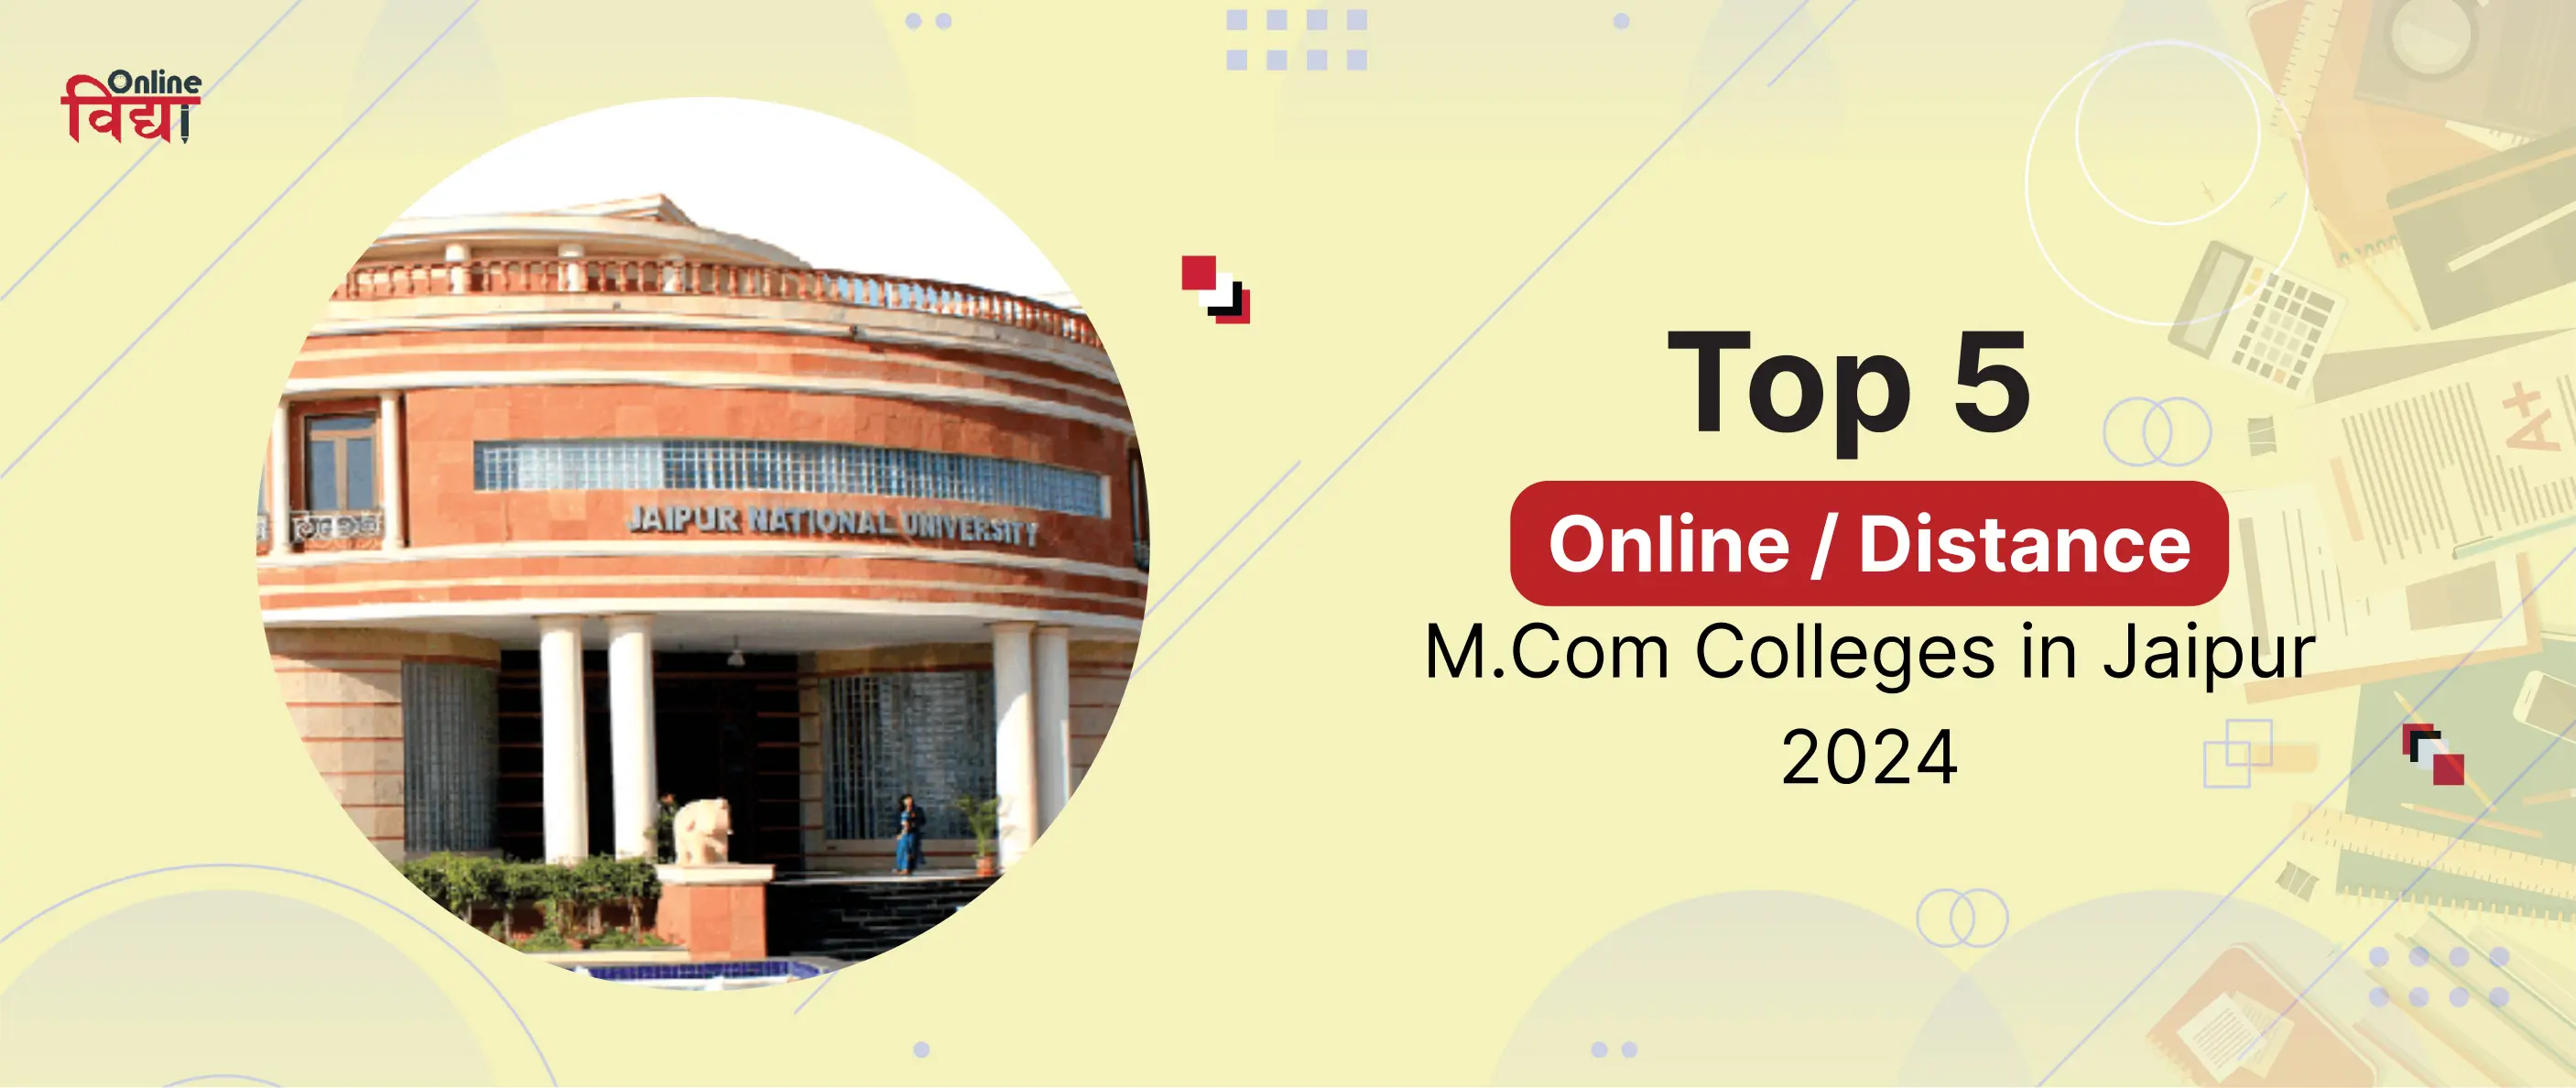 Top 5 Online/Distance M.Com Colleges in Jaipur 2024